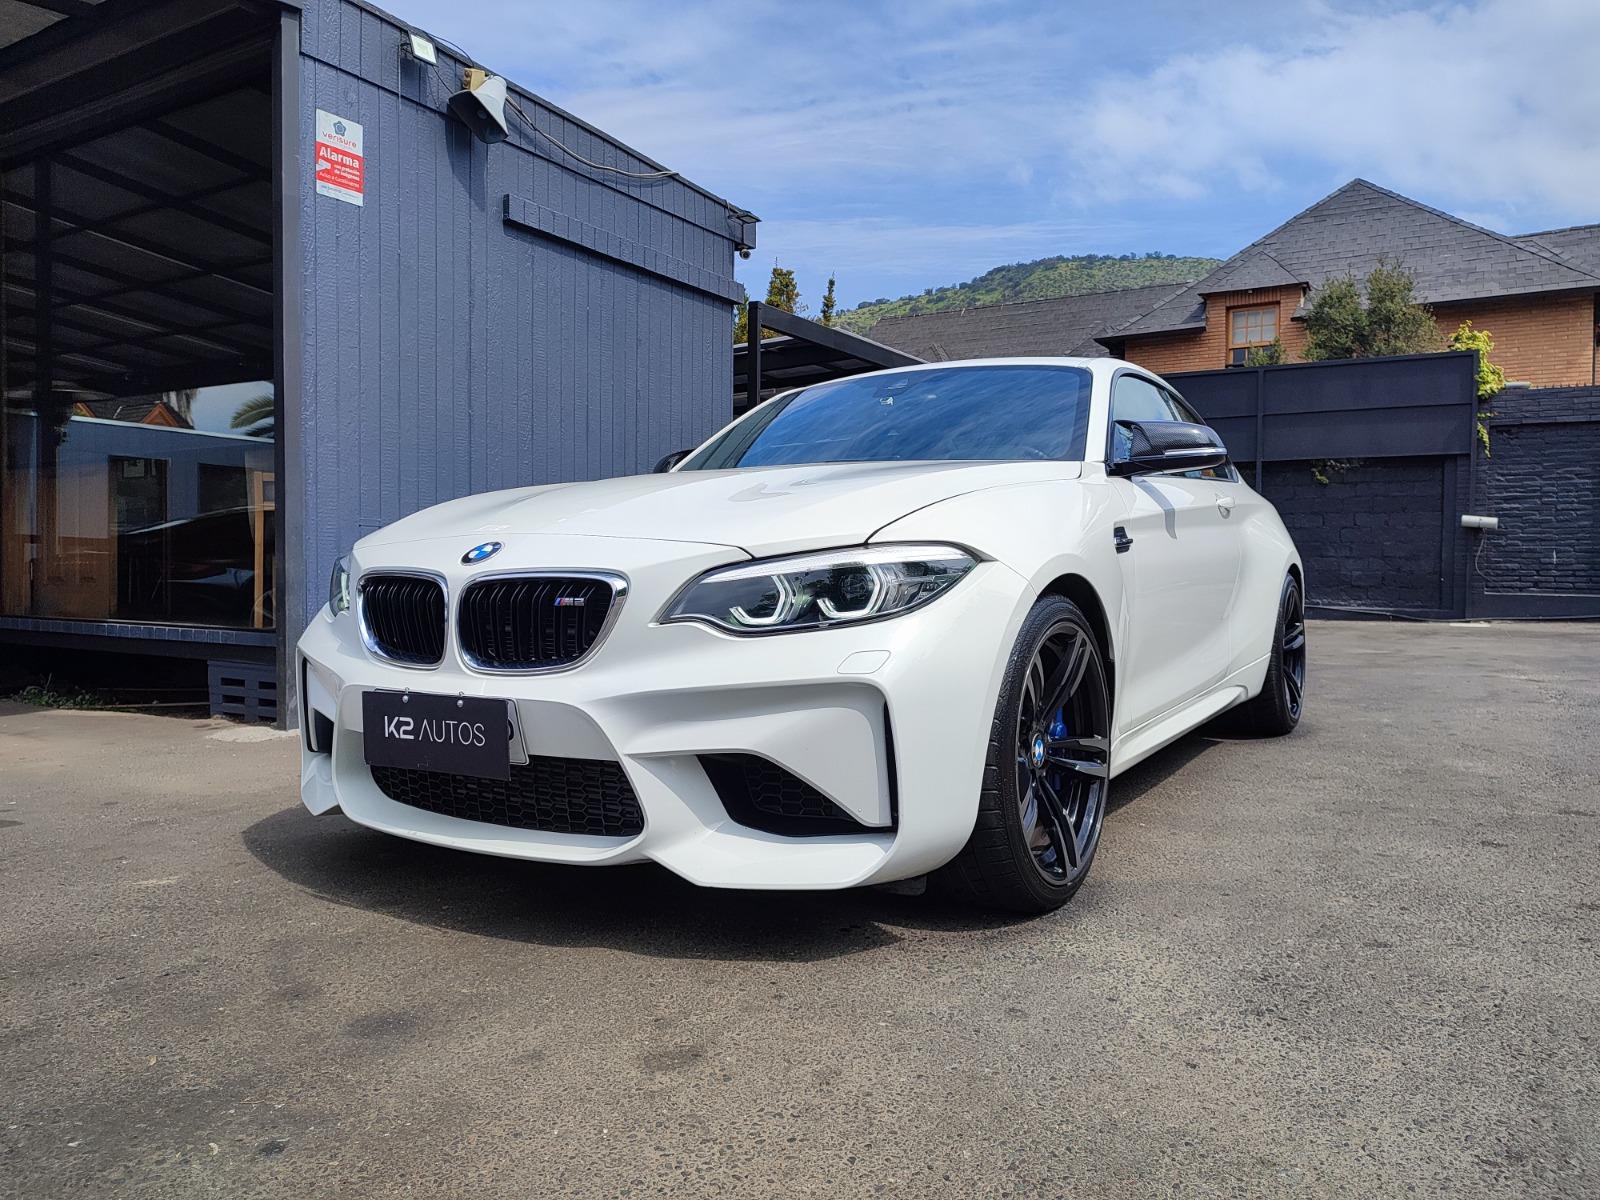 BMW M2 3.0 TWIN TURBO COUPE 2019 ECU TUNNING, MANTENCION RECIEN HECHA - 